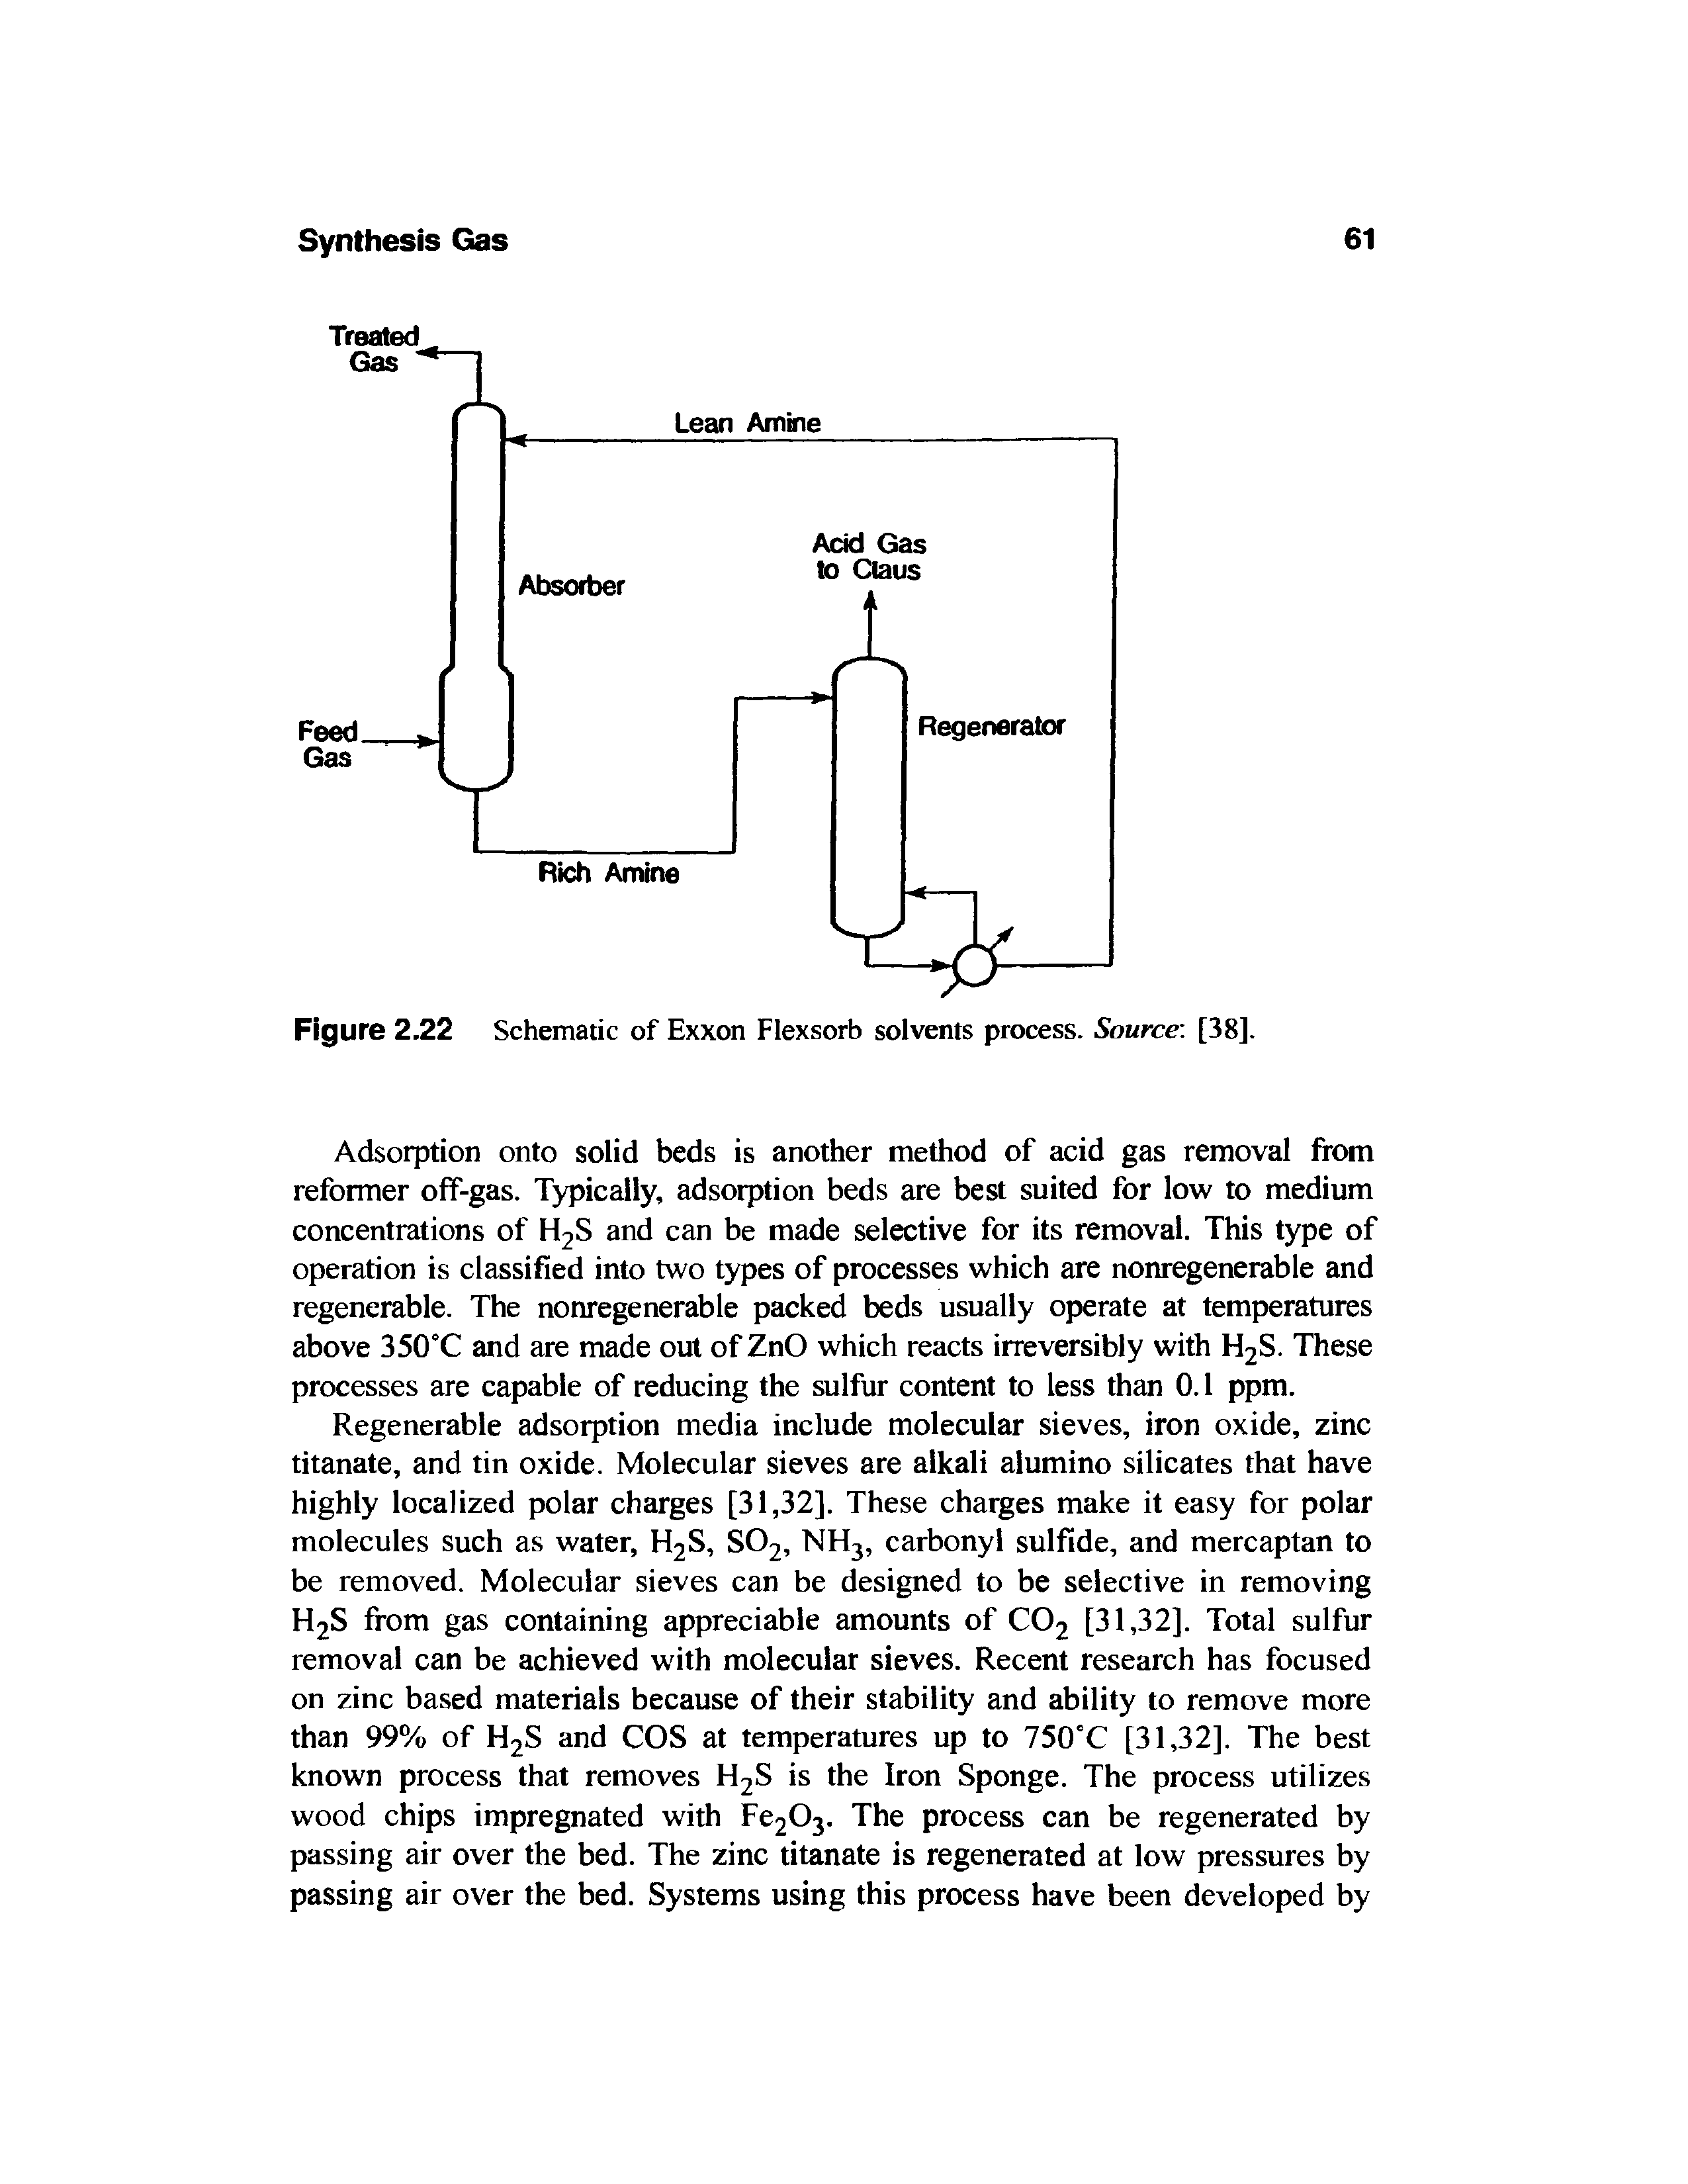 Figure 2.22 Schematic of Exxon Flexsorb solvents process. Source [38].